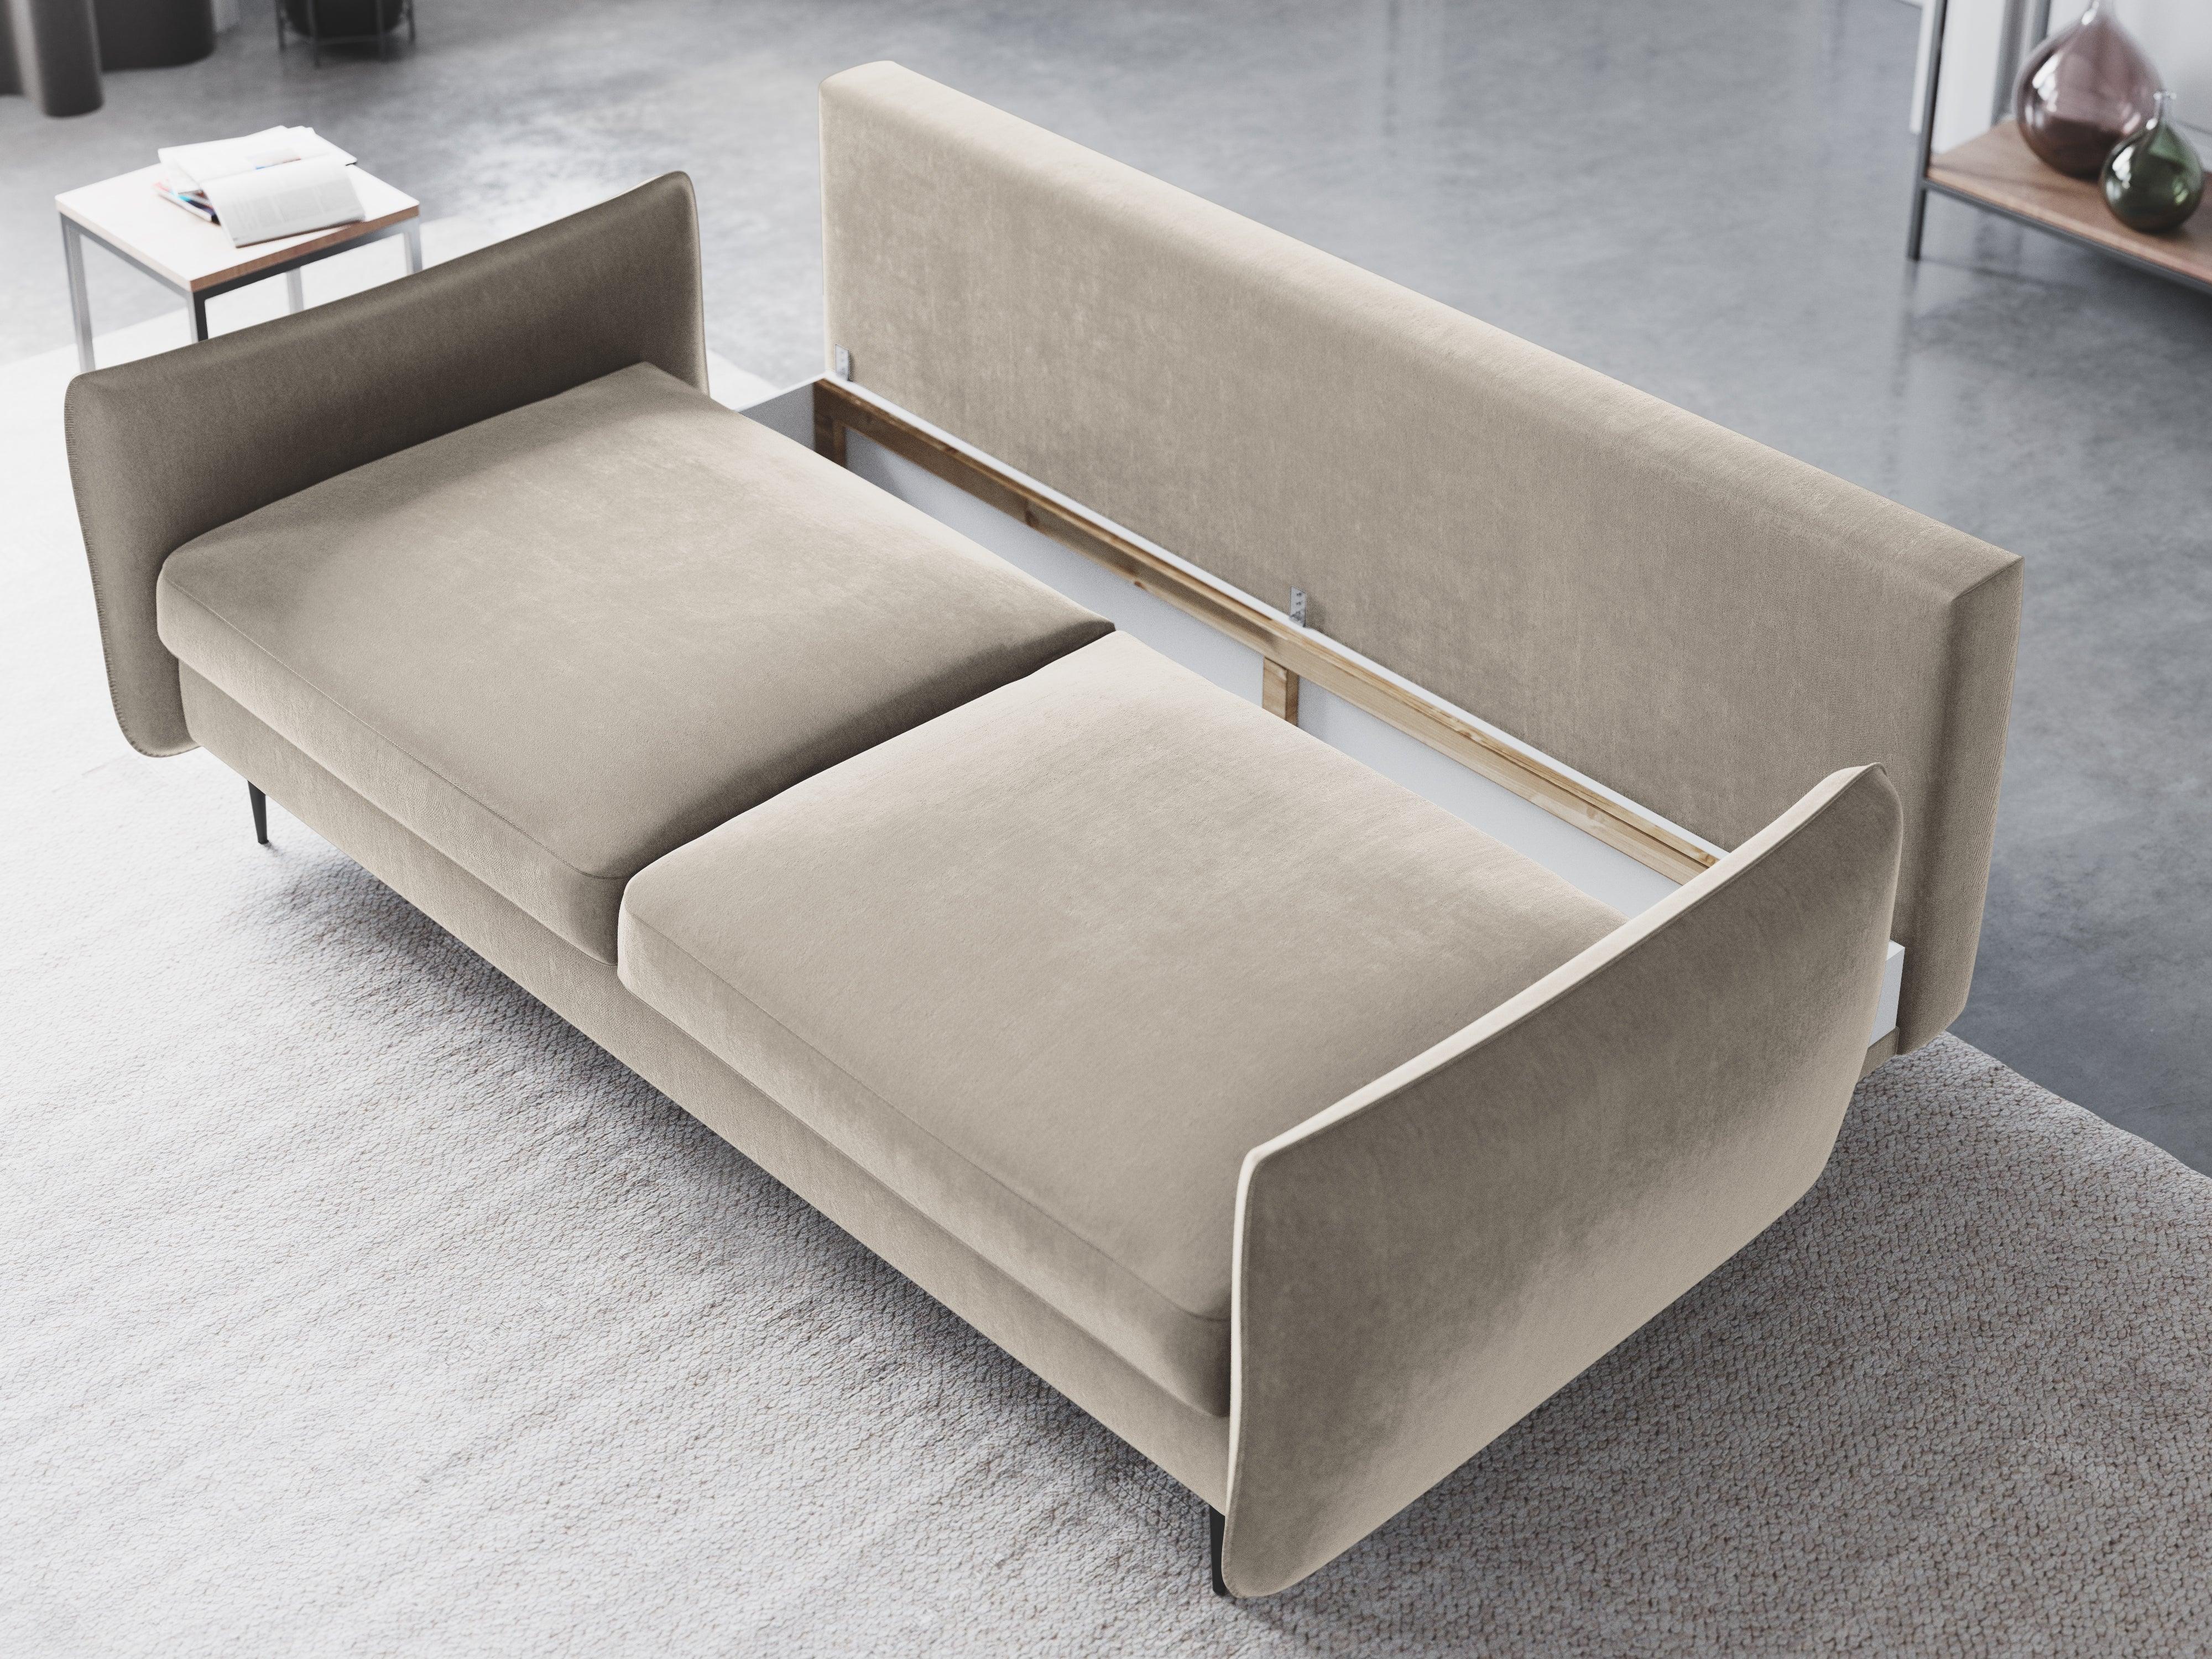 Sofa aksamitna z funkcją spania VERMONT beżowy Cosmopolitan Design    Eye on Design